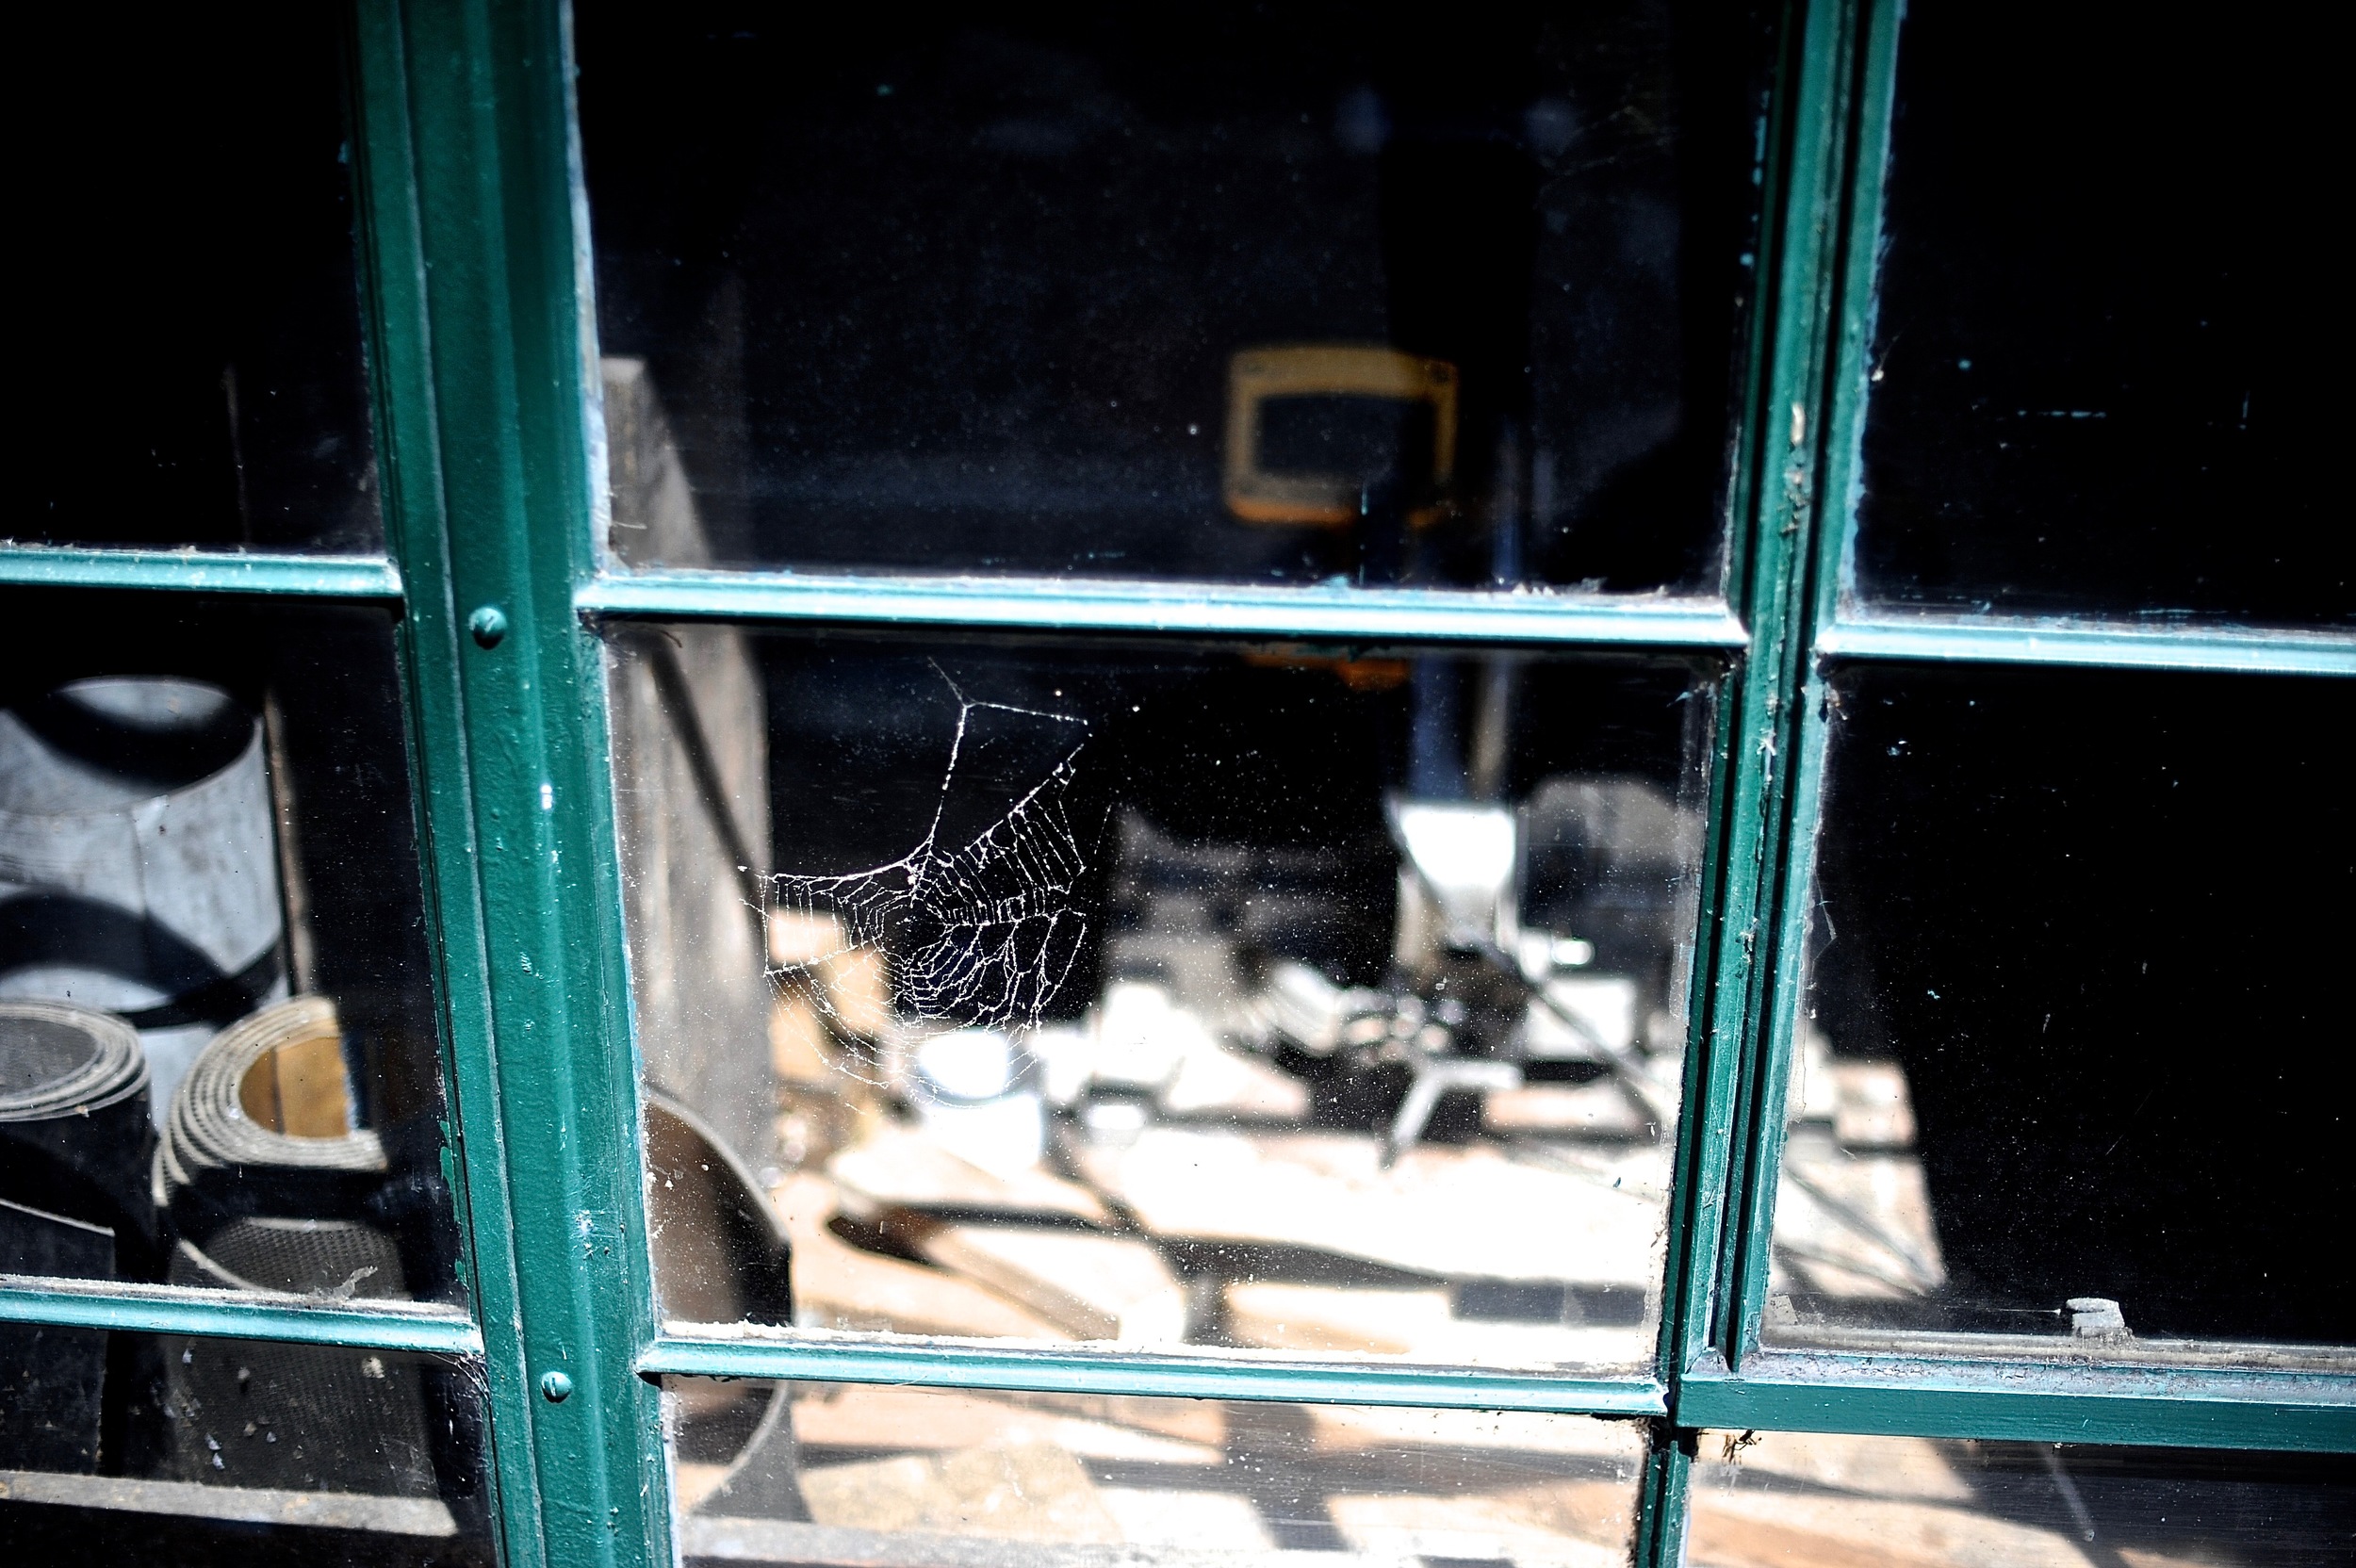 spiderweb in window